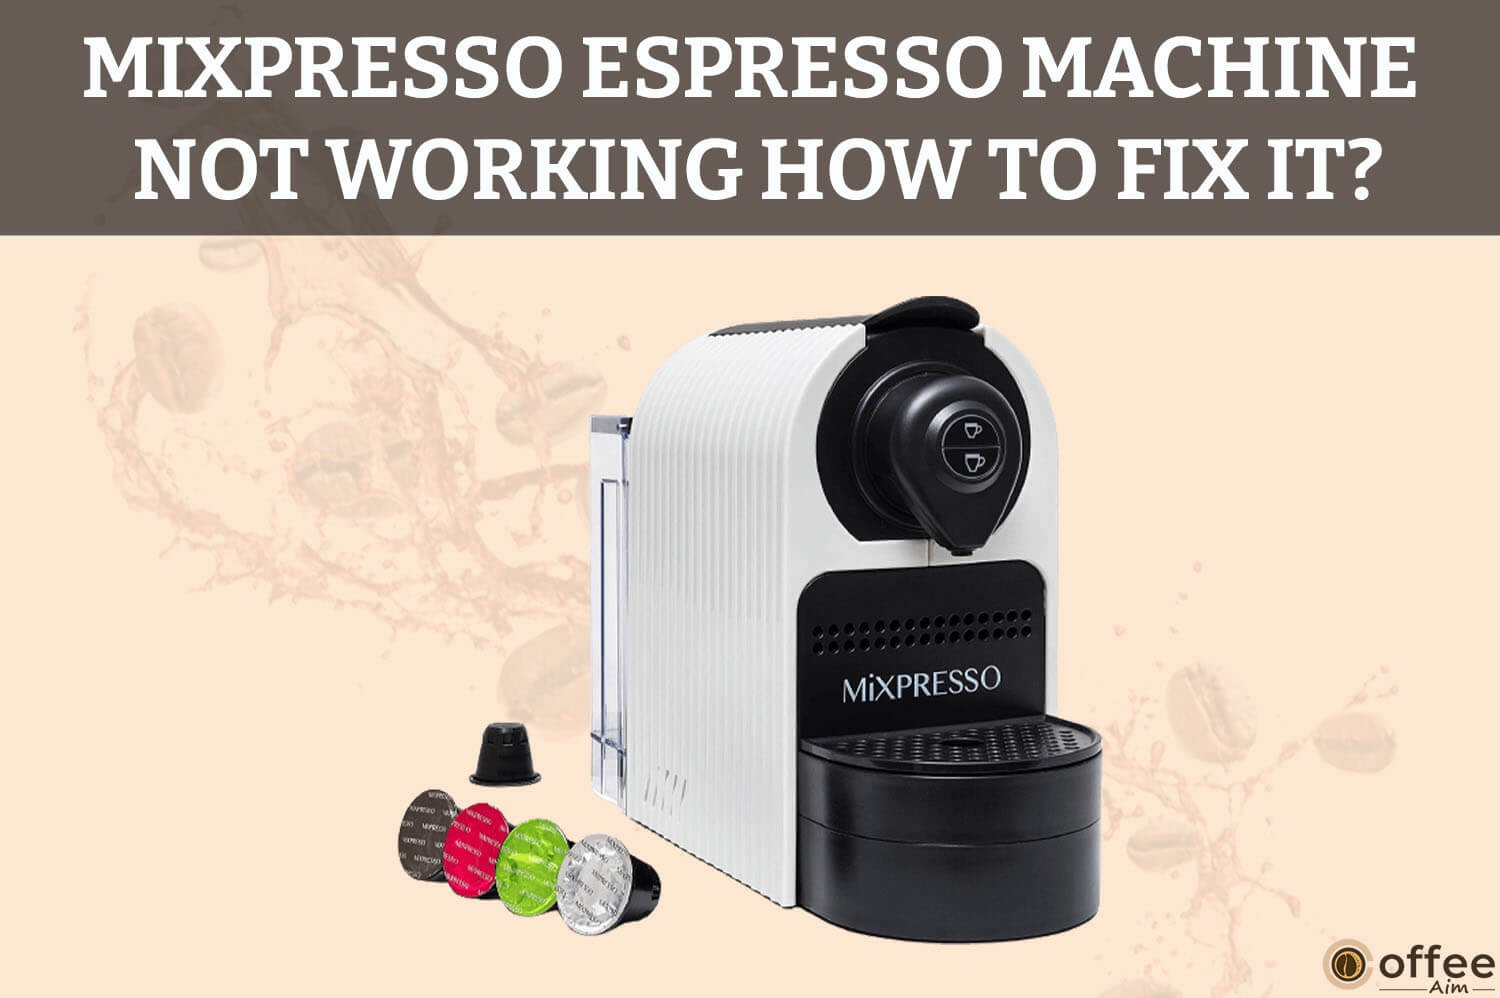 Mixpresso-Espresso-Machine-Not-Working-How-to-Fix-It